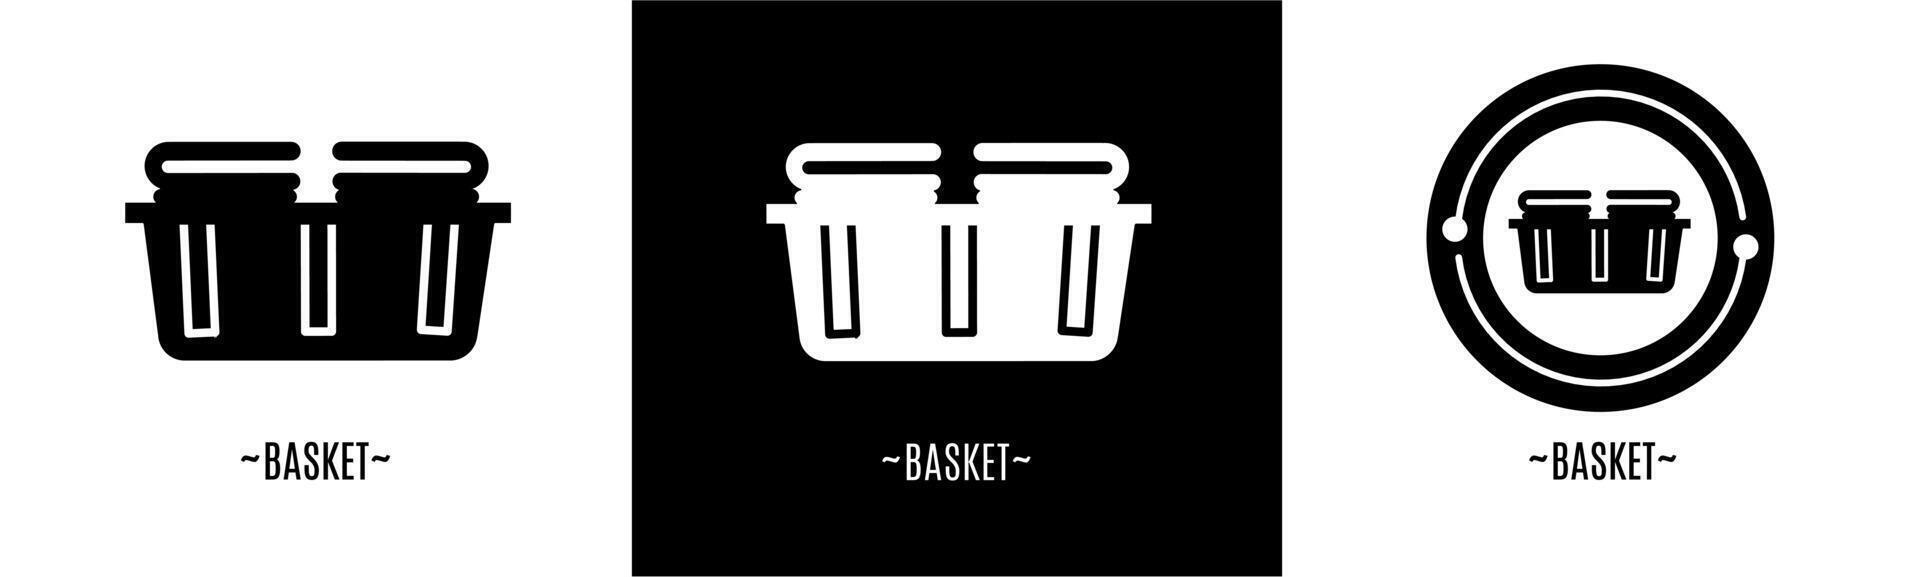 Basket logo set. Collection of black and white logos. Stock vector. vector